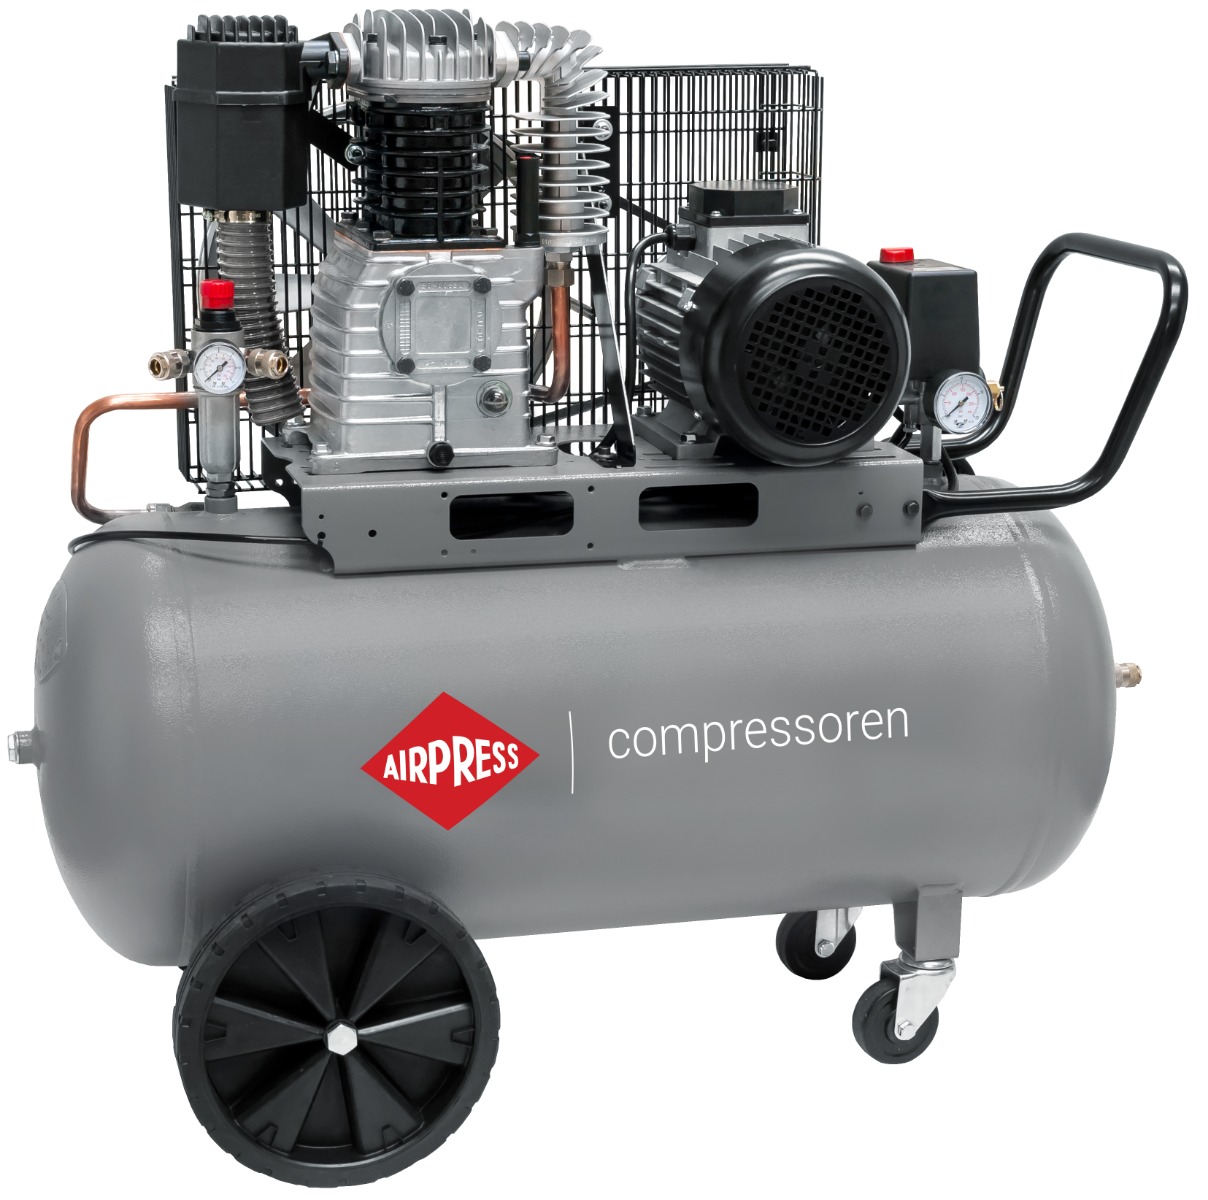 Compresor de aire de una etapa profesional HK 425-90